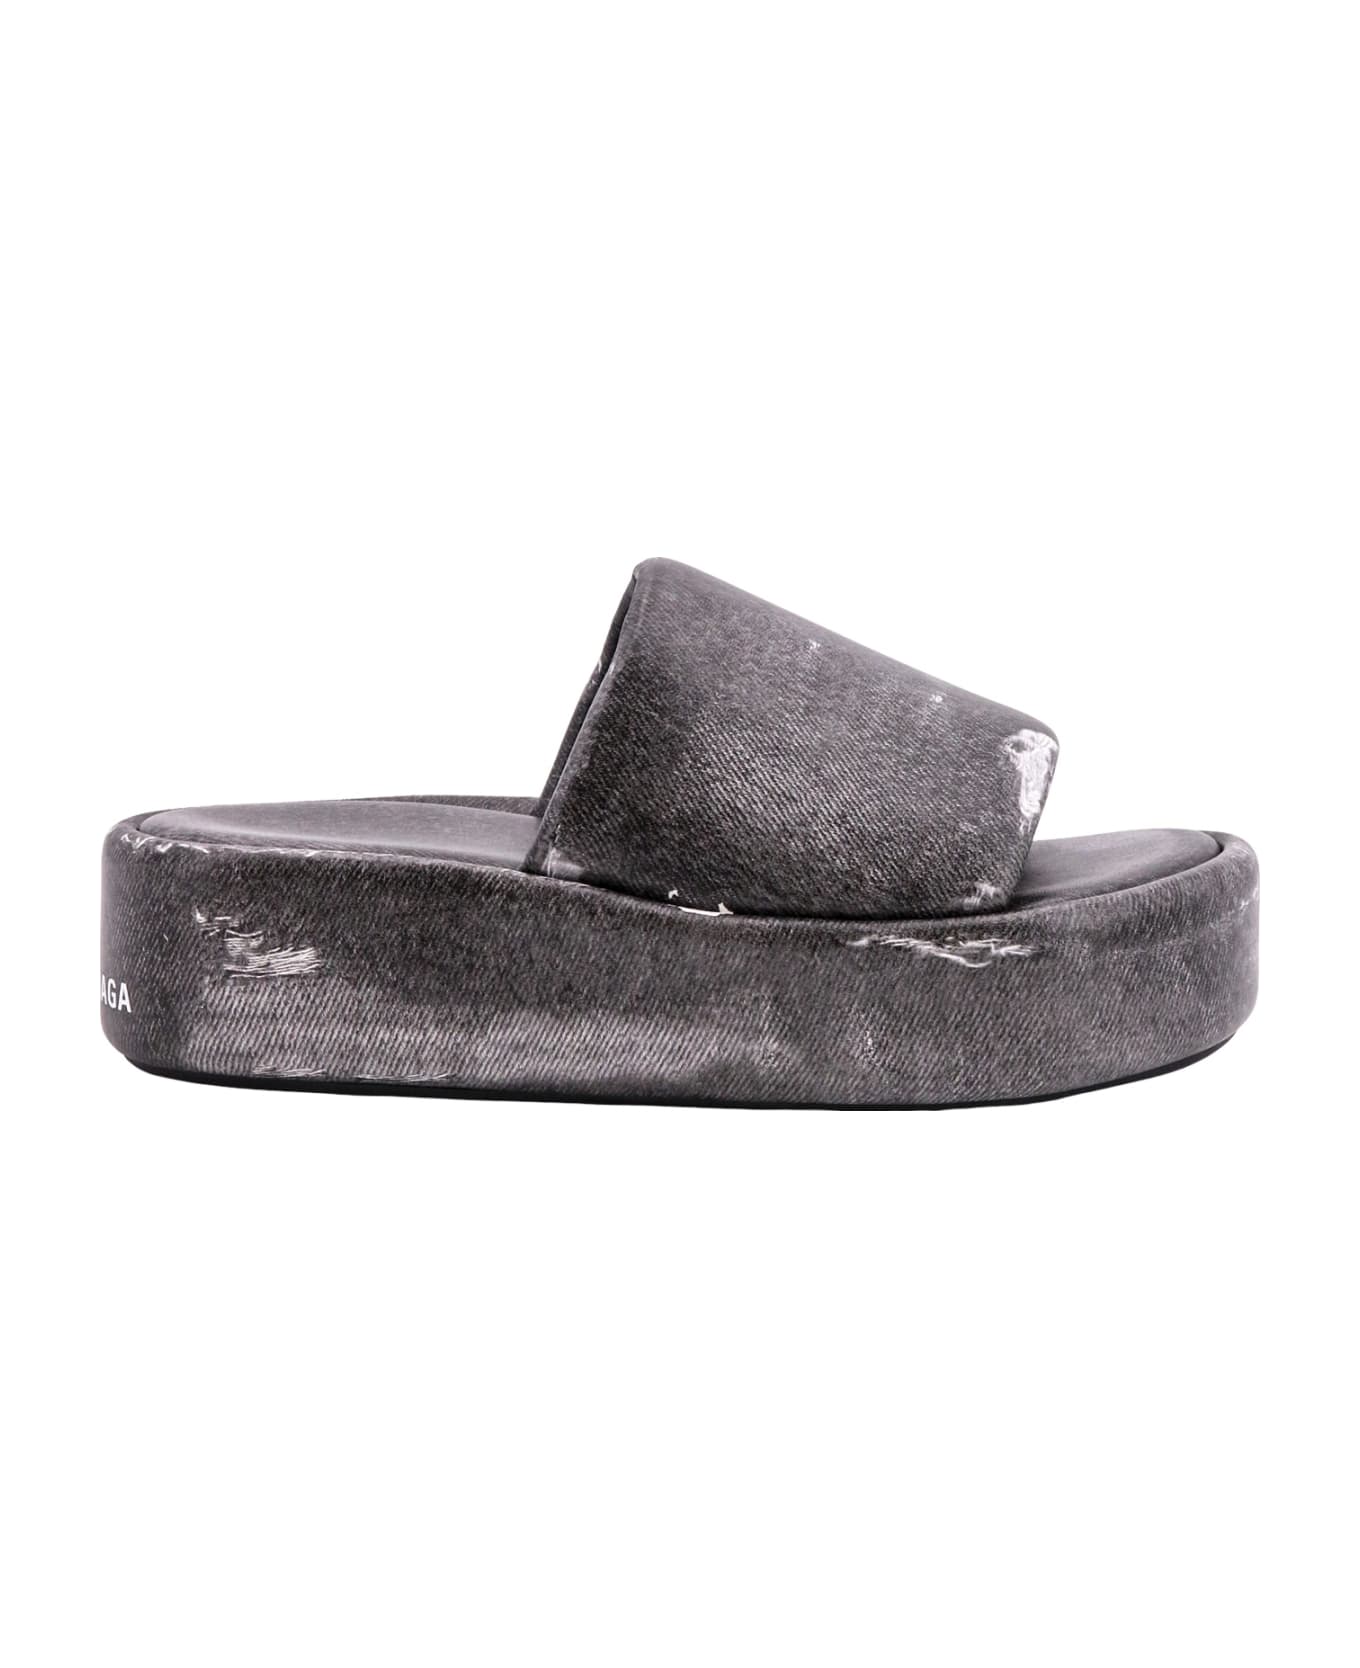 Balenciaga Slide Sandals - Black サンダル